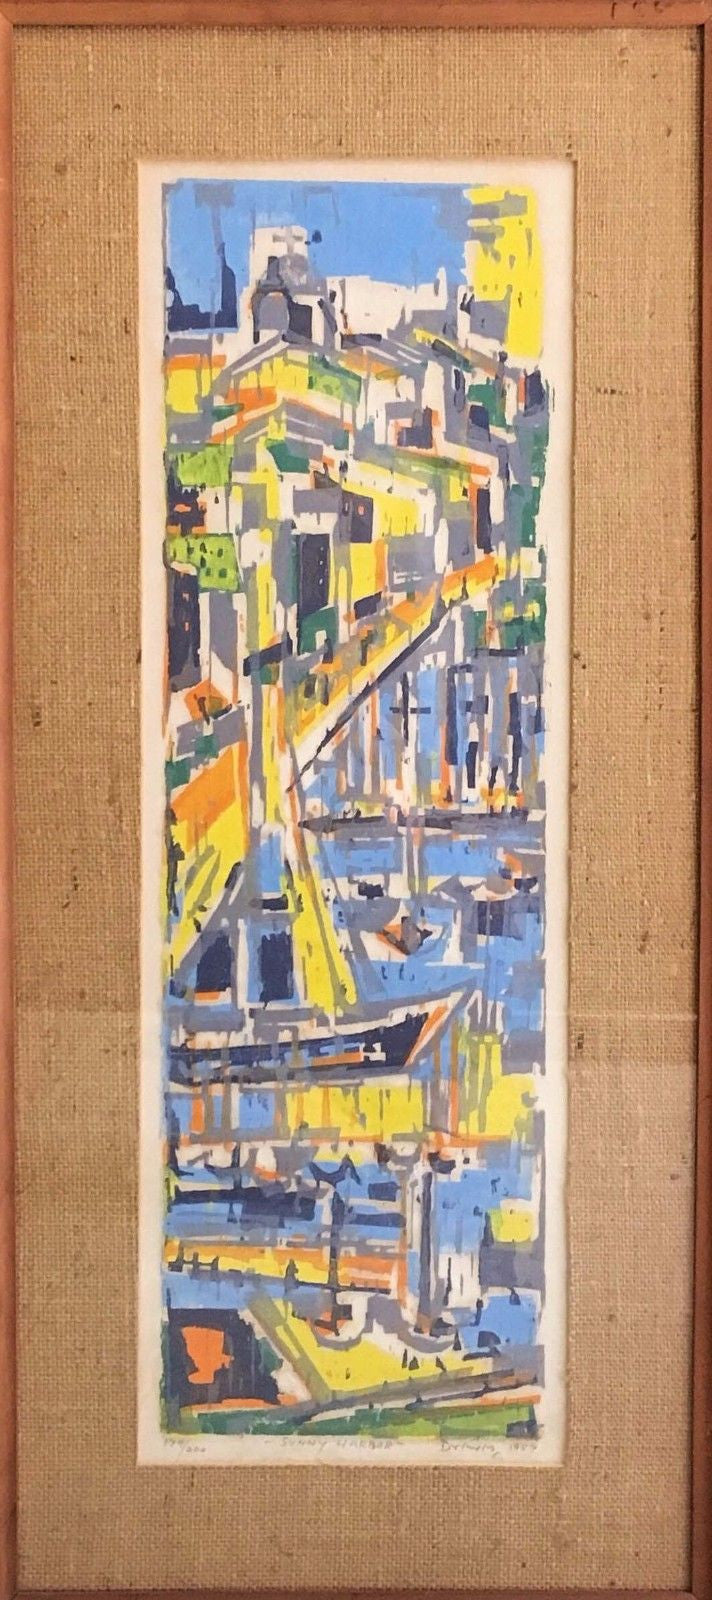 WERNER DREWES "Sunny Harbor - Marseille", Limited Edition 174/200 Signed Color Woodcut 1957 - $3K VALUE APR 57